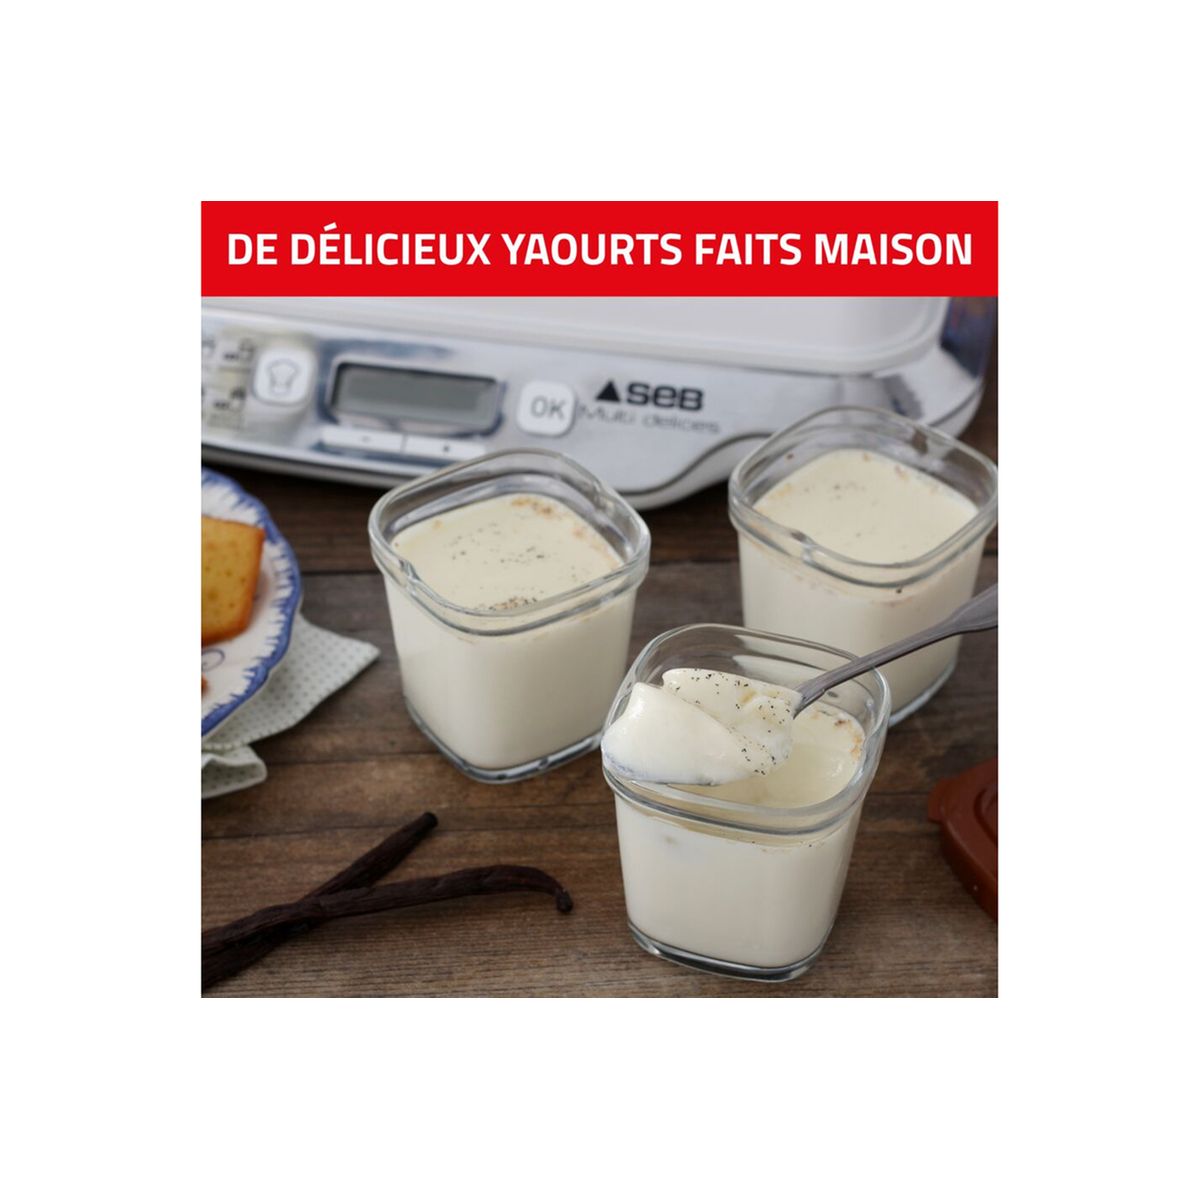 Yaourtière Multi Délices express YG661A00 blanc SEB : la yaourtière à Prix  Carrefour